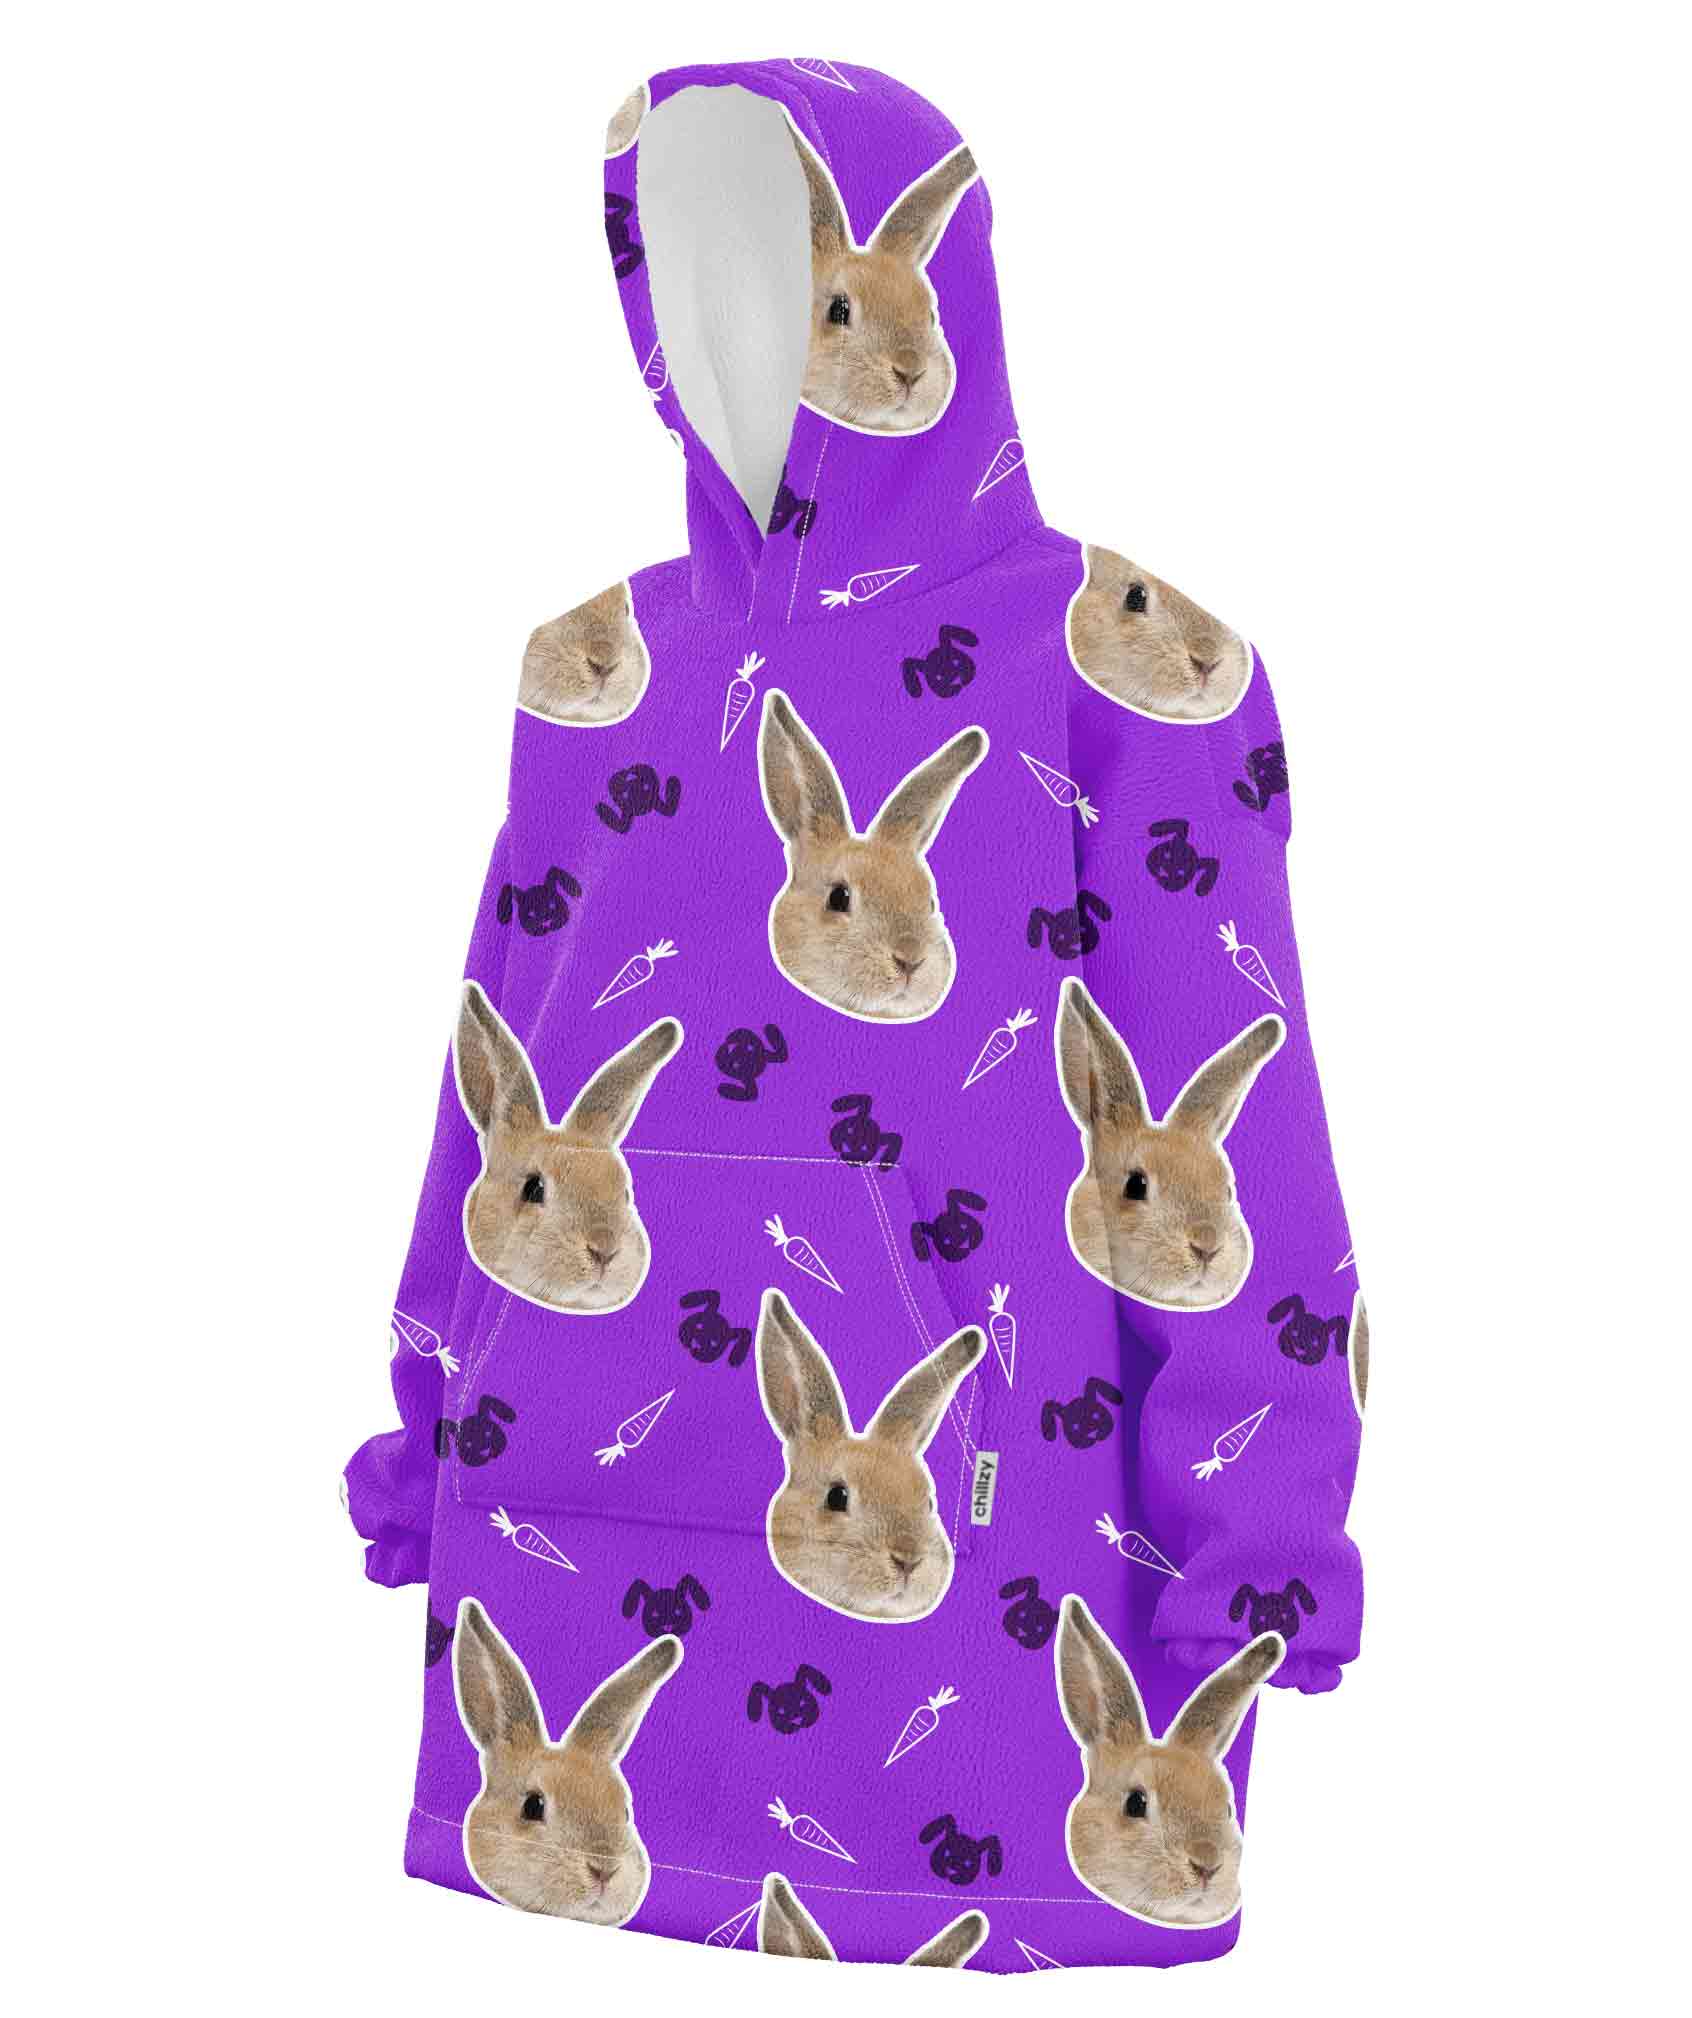 Your Rabbit Chillzy Hoodie Blanket